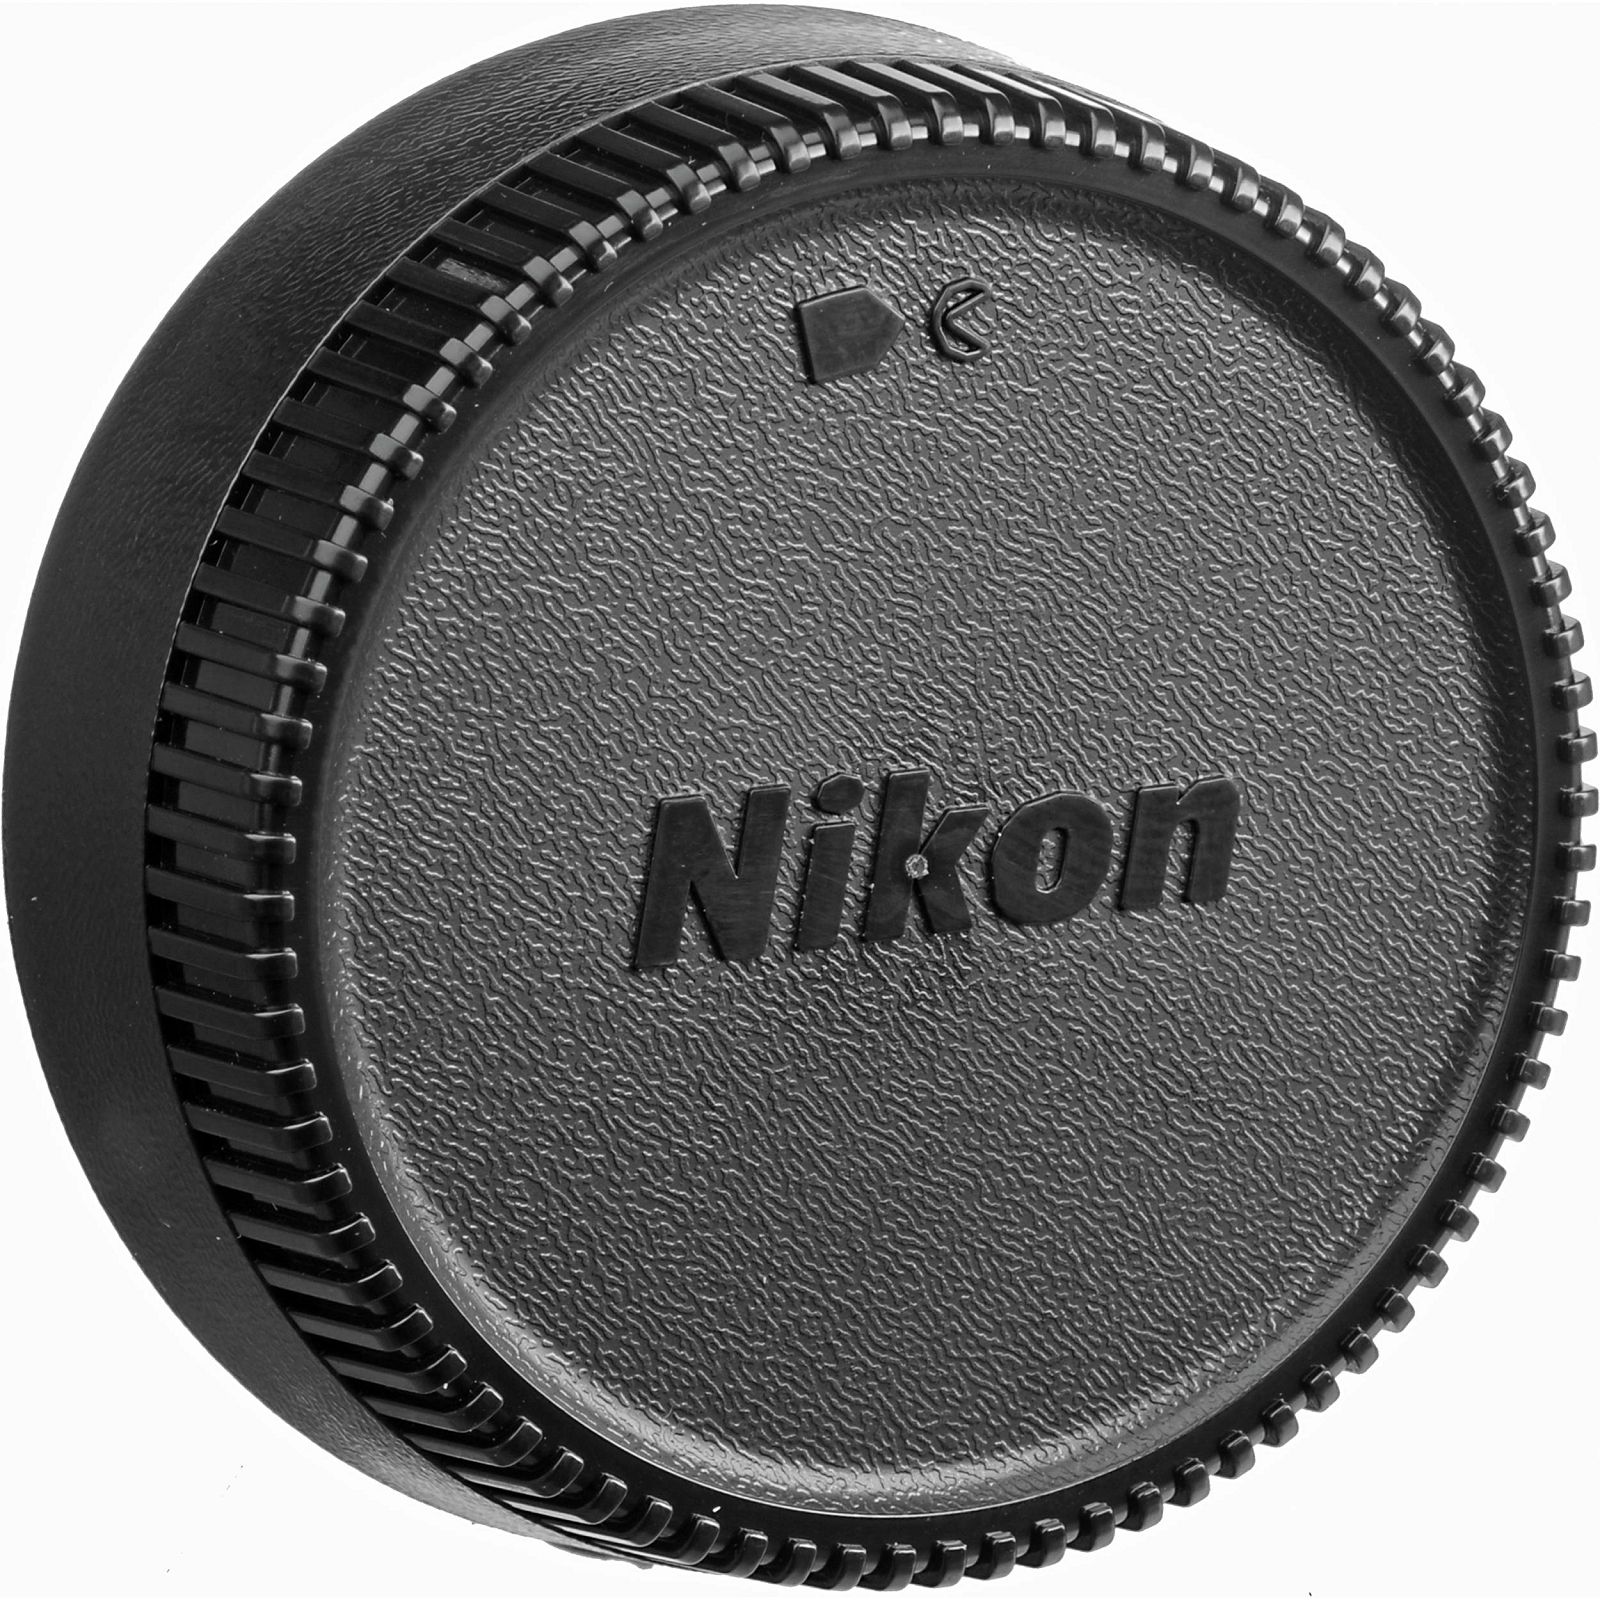 Nikon AF-S 105mm F2.8G IF-ED VR Micro FX Macro objektiv fiksne žarišne duljine Nikkor auto focus prime lens 105 2.8 G (JAA630DB)